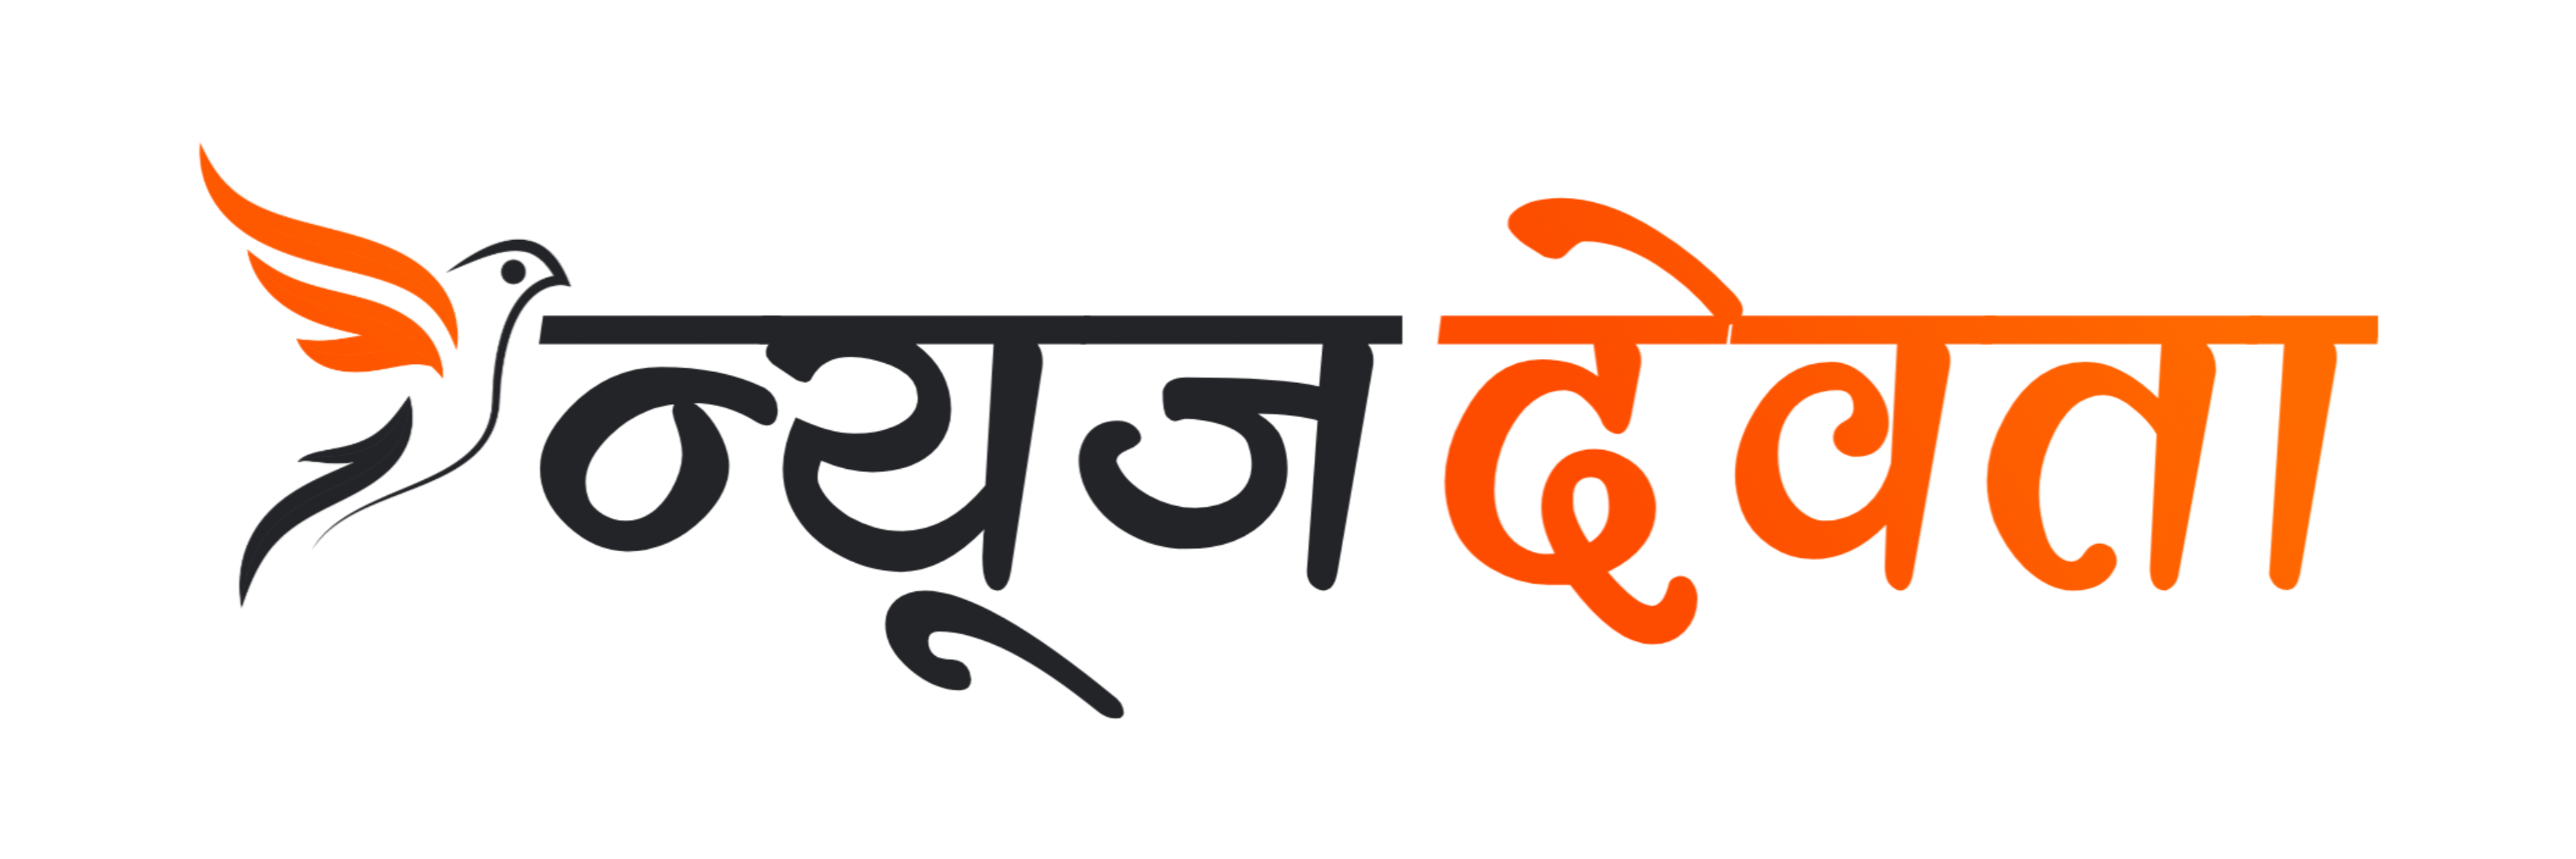 newsdevta.com logo